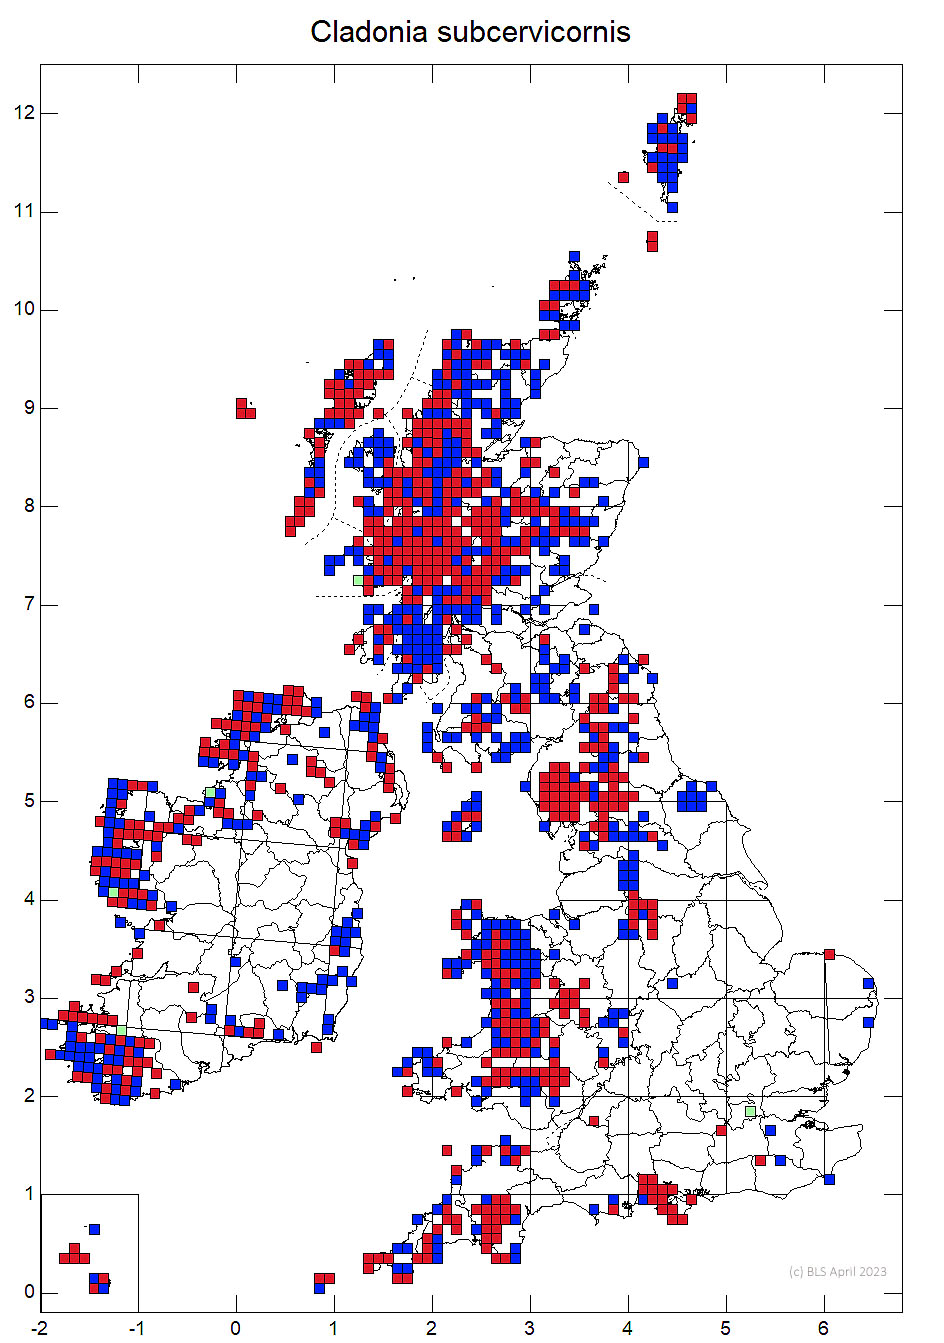 Cladonia subcervicornis 10km sq distribution map